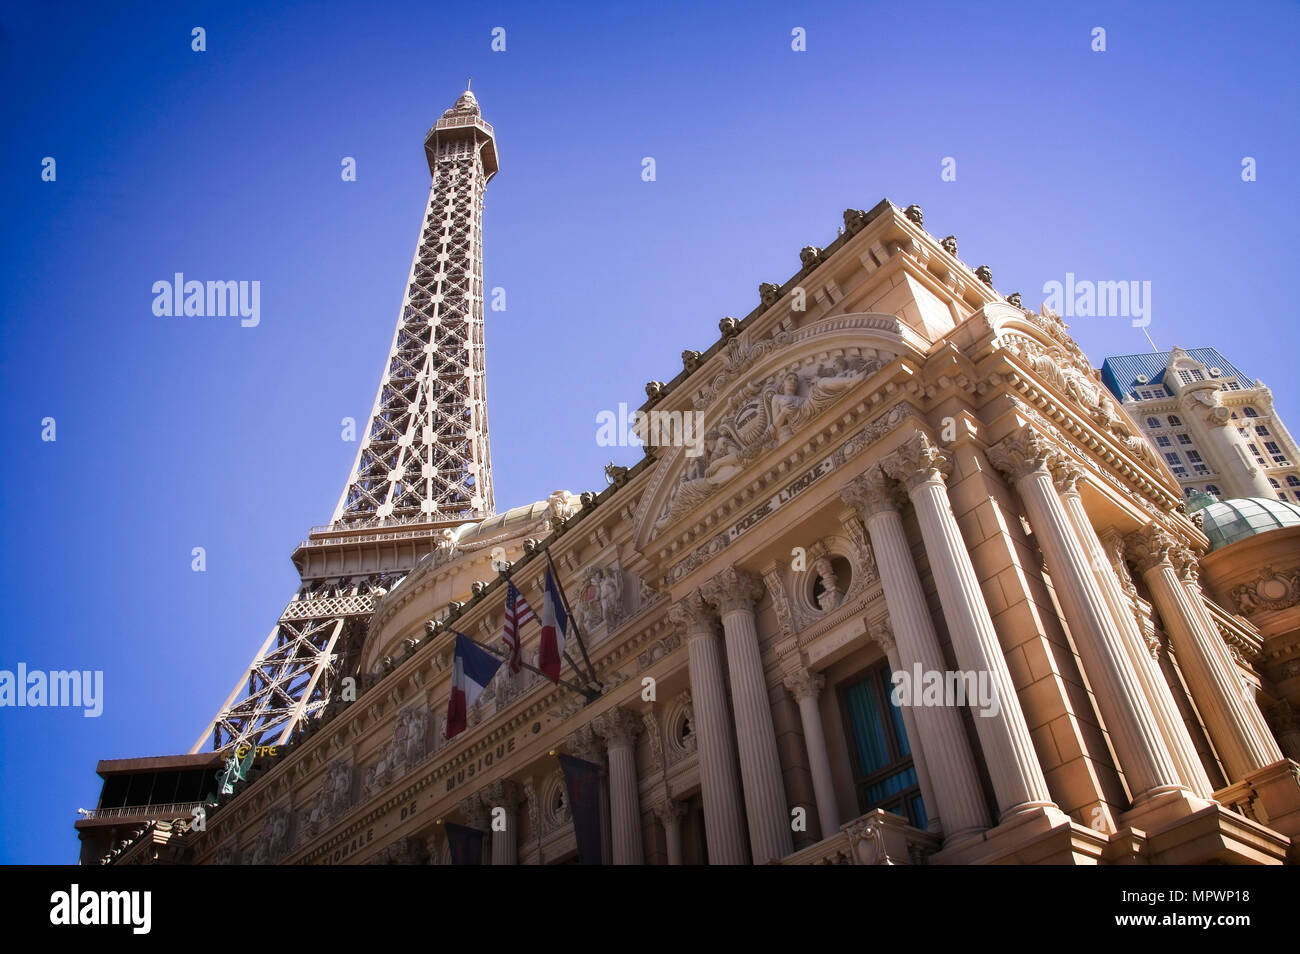 La Torre Eiffel replica spicca al casinò di Parigi sulla strip di Las Vegas, Nevada. Foto Stock